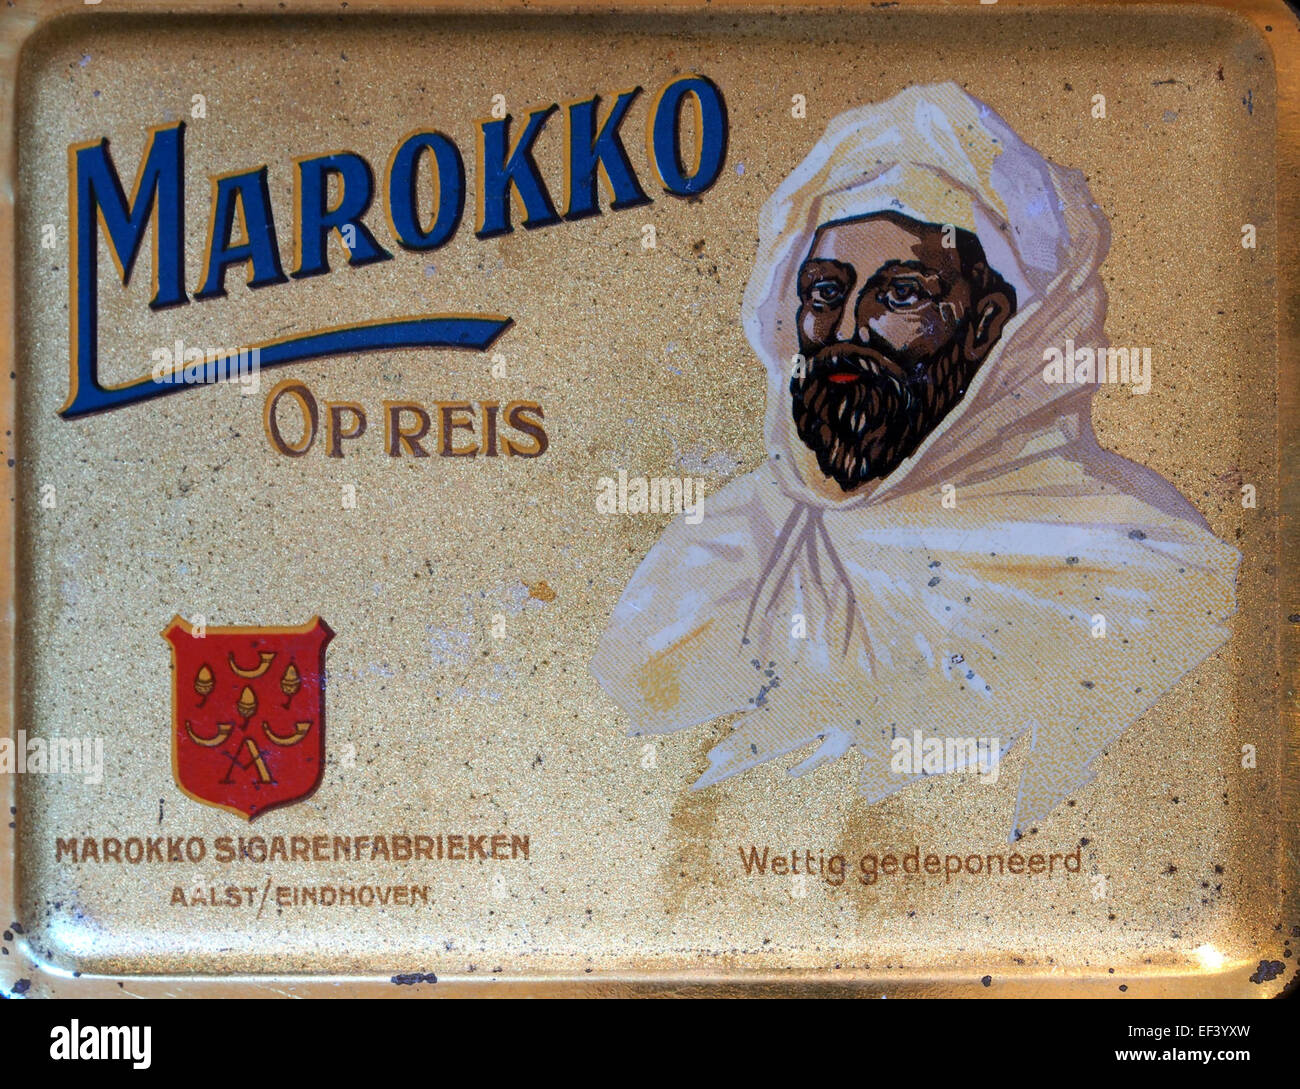 Marokko Op Reis sigarenblikje Stock Photo